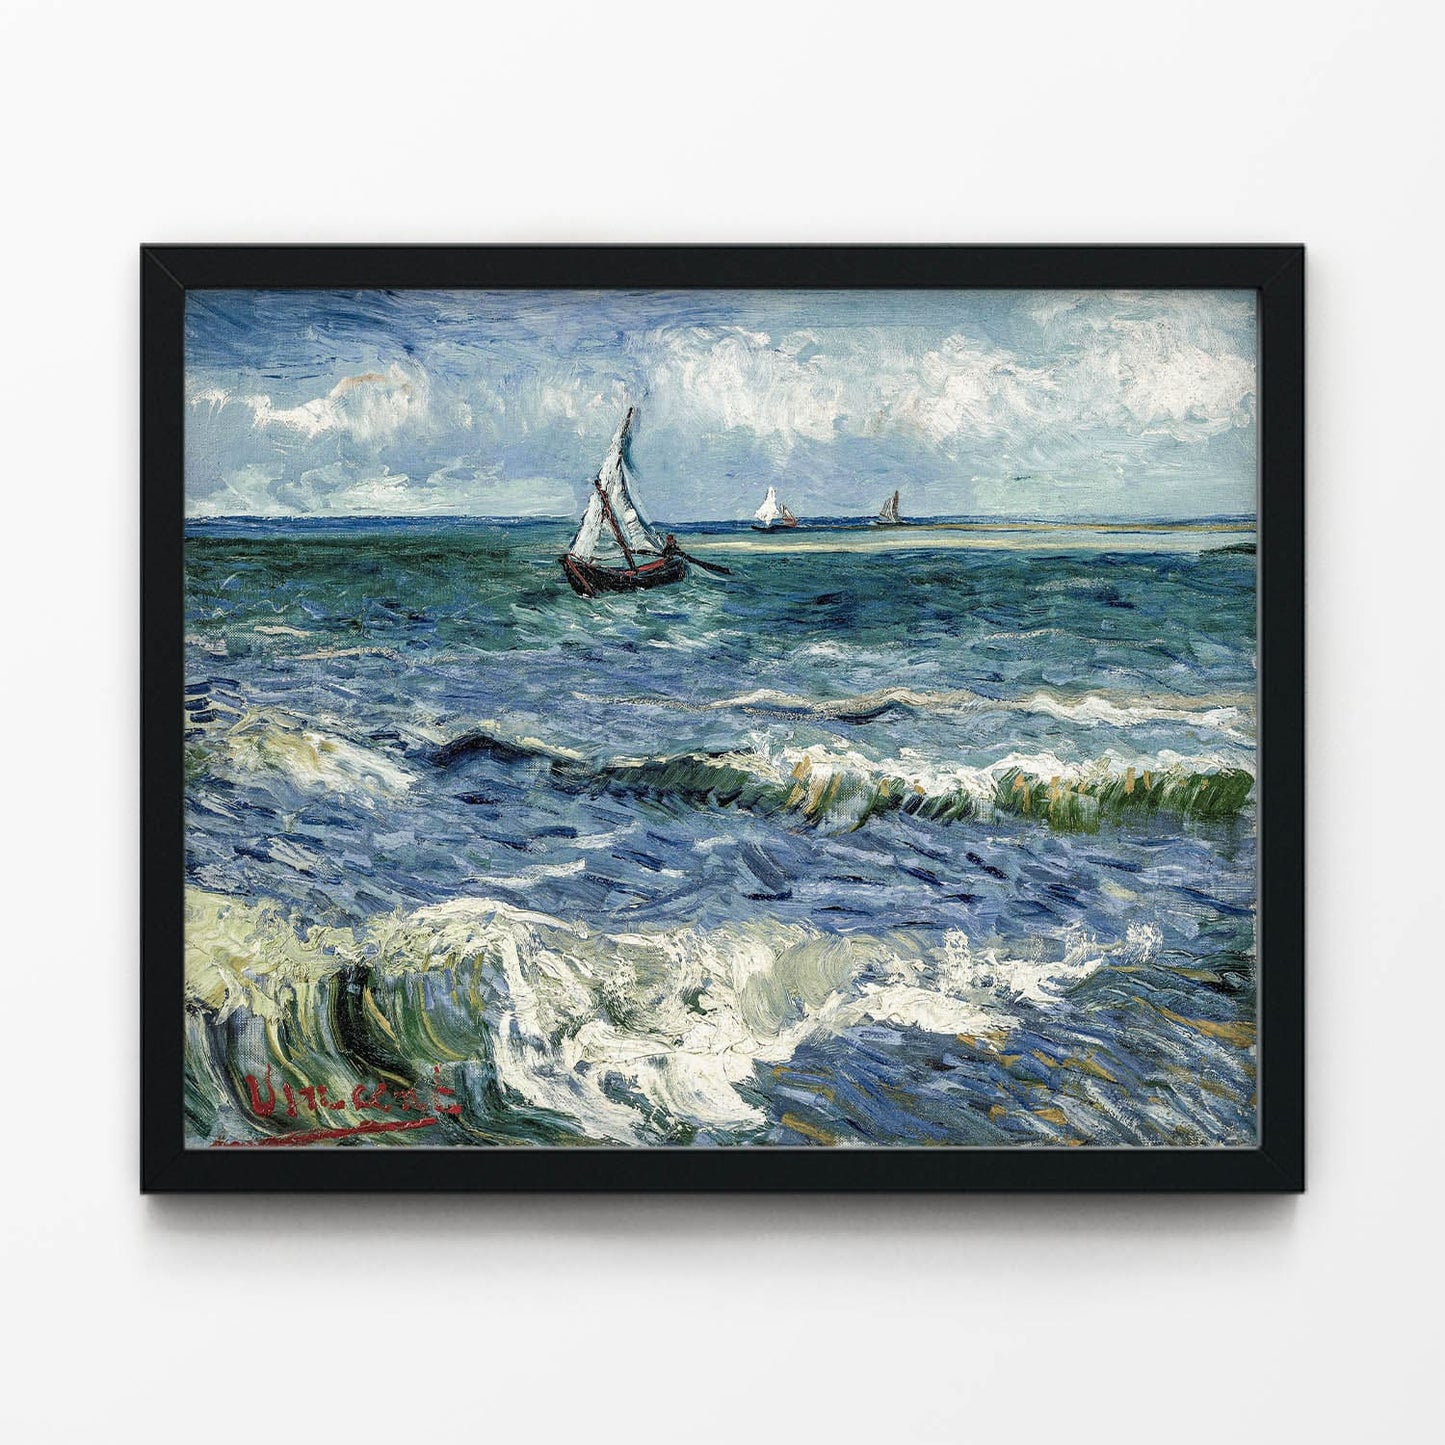 Ocean Painting Art Print in Black Picture Frame